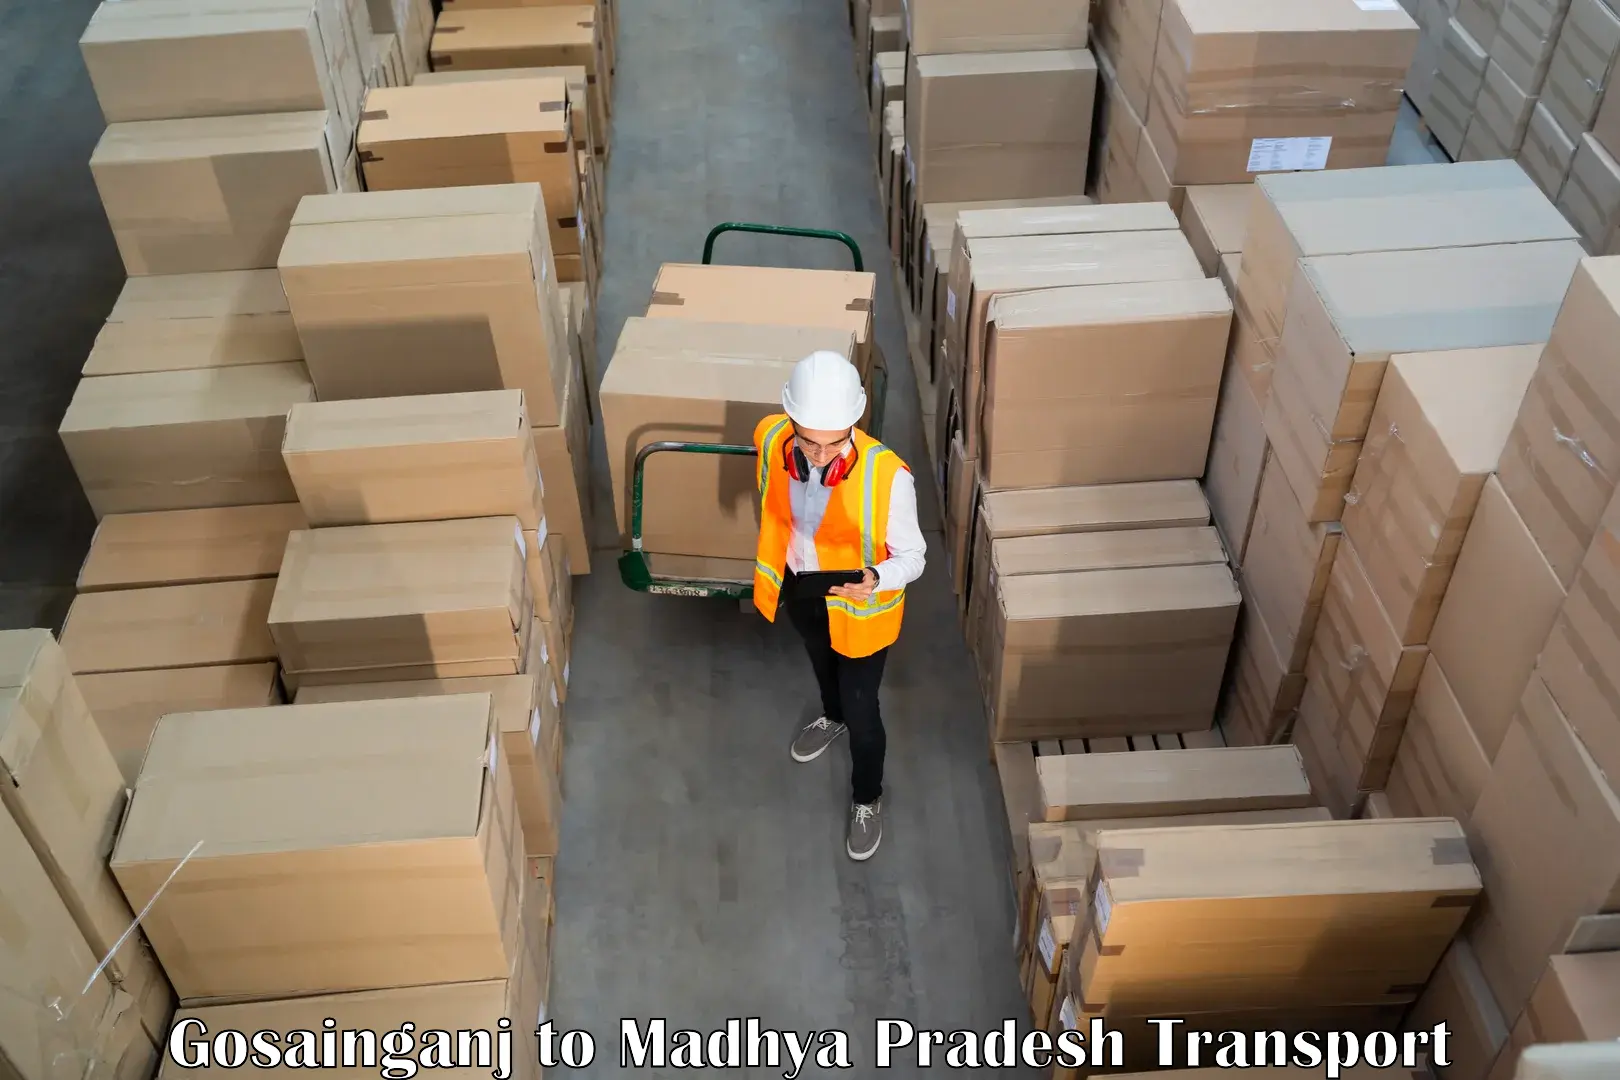 Shipping partner in Gosainganj to Agar